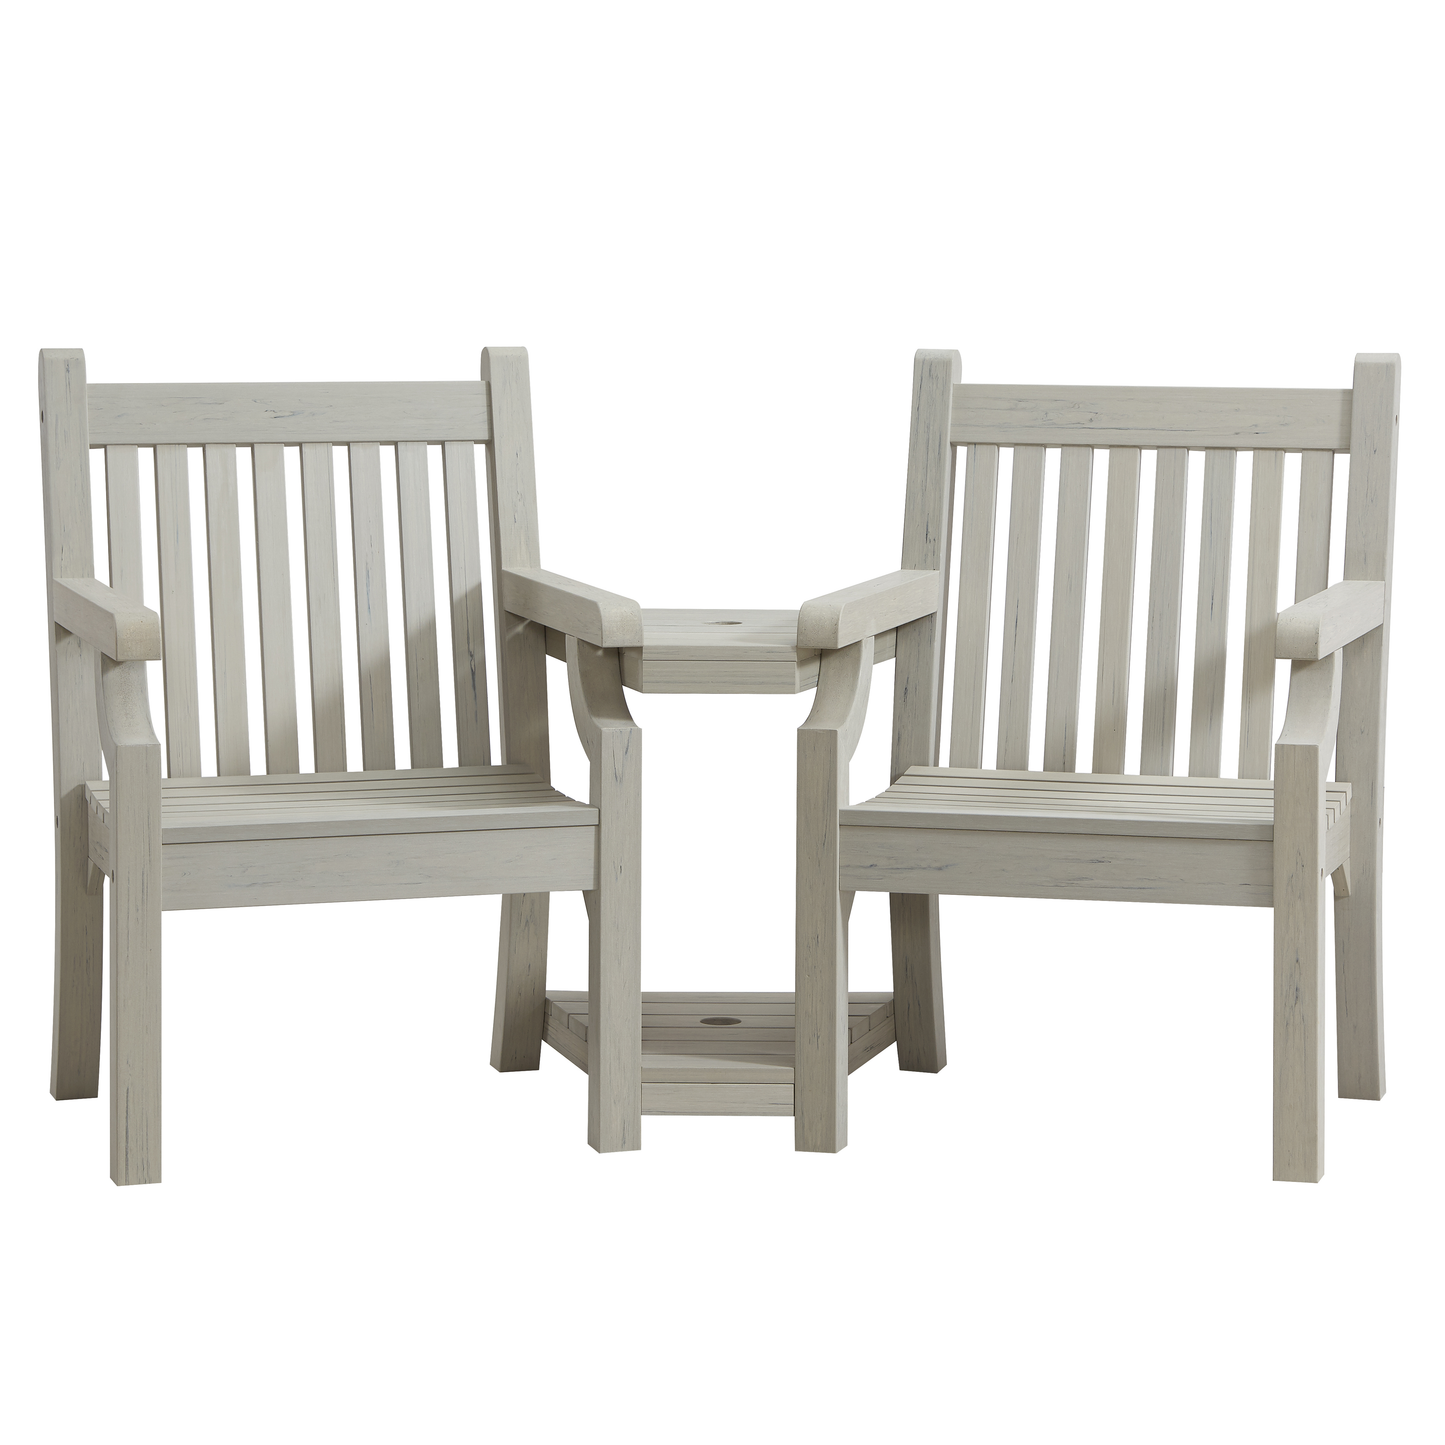 Winawood Sandwick Wood Effect Love Seat - Stone Grey